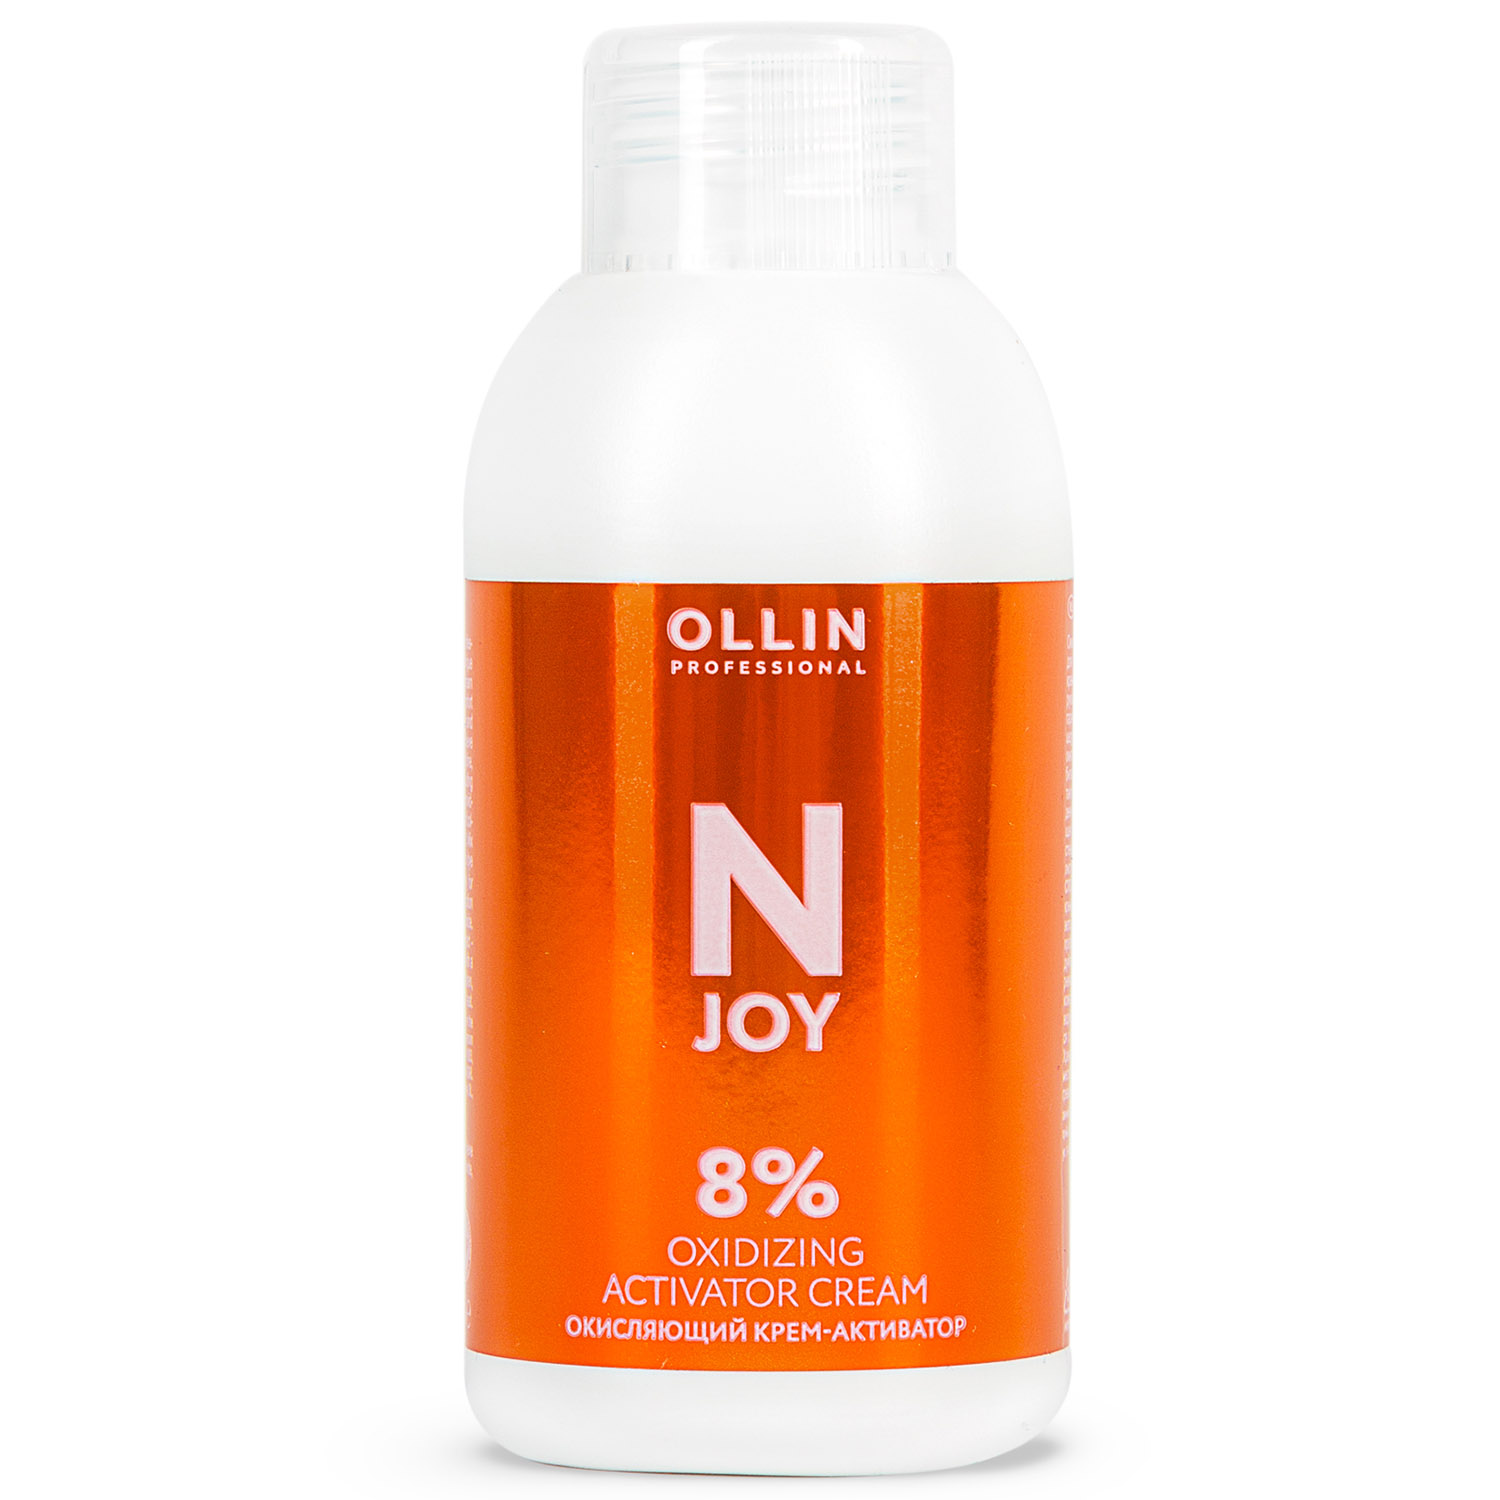 Ollin Professional Окисляющий крем-активатор 8%, 100 мл (Ollin Professional, N-Joy) окисляющий крем активатор для краски n joy 100мл крем активатор 4%